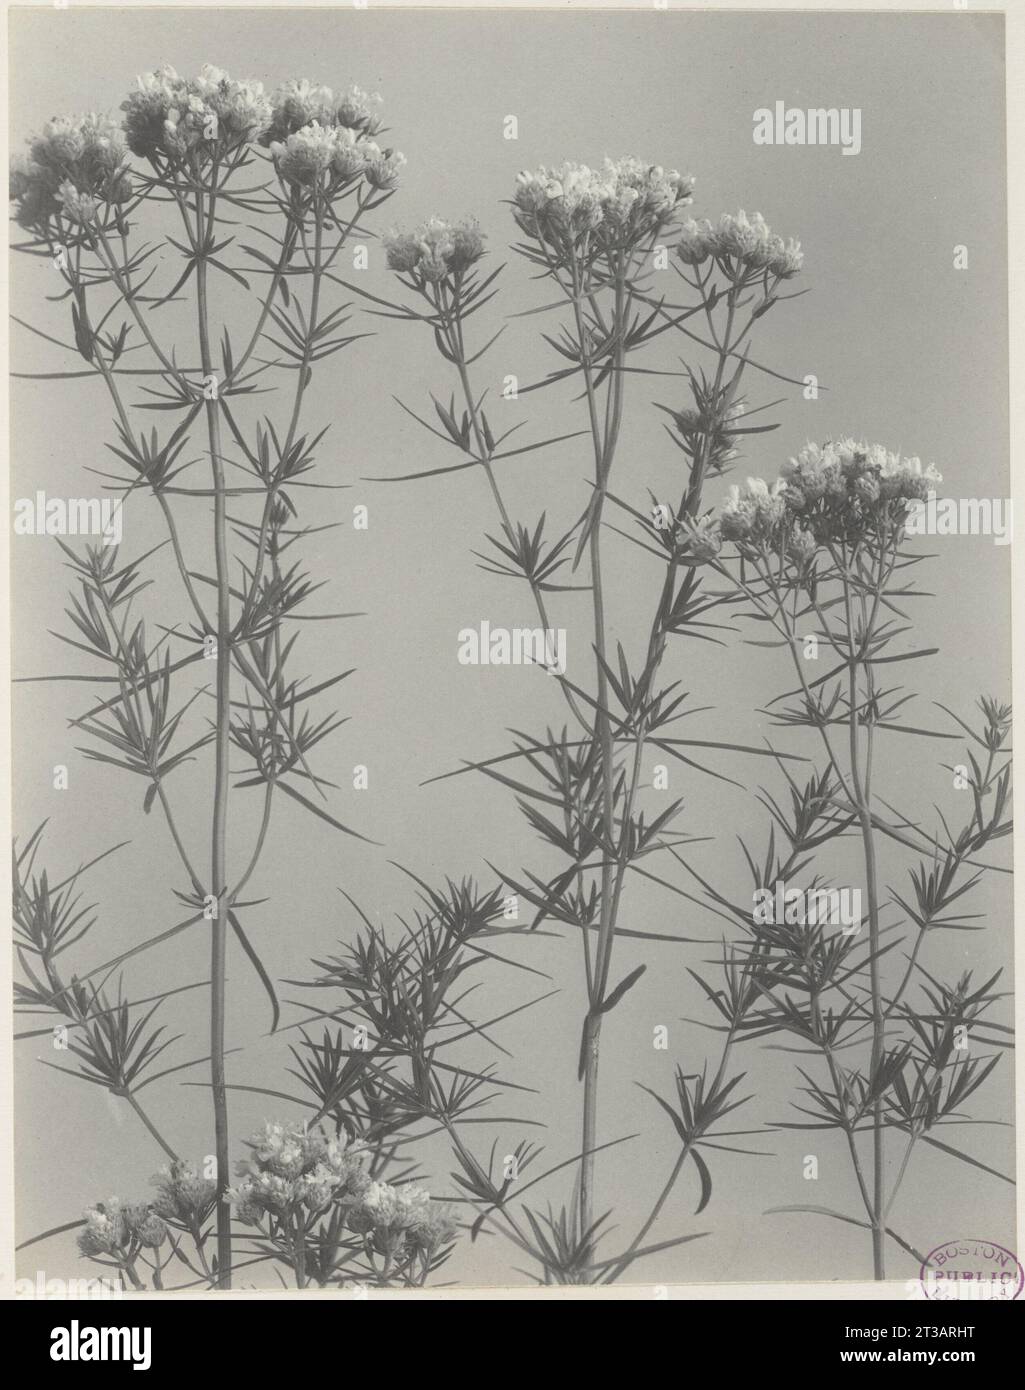 187. Pycnanthemum flexuosum, narrow-leaved mountain mint Stock Photo